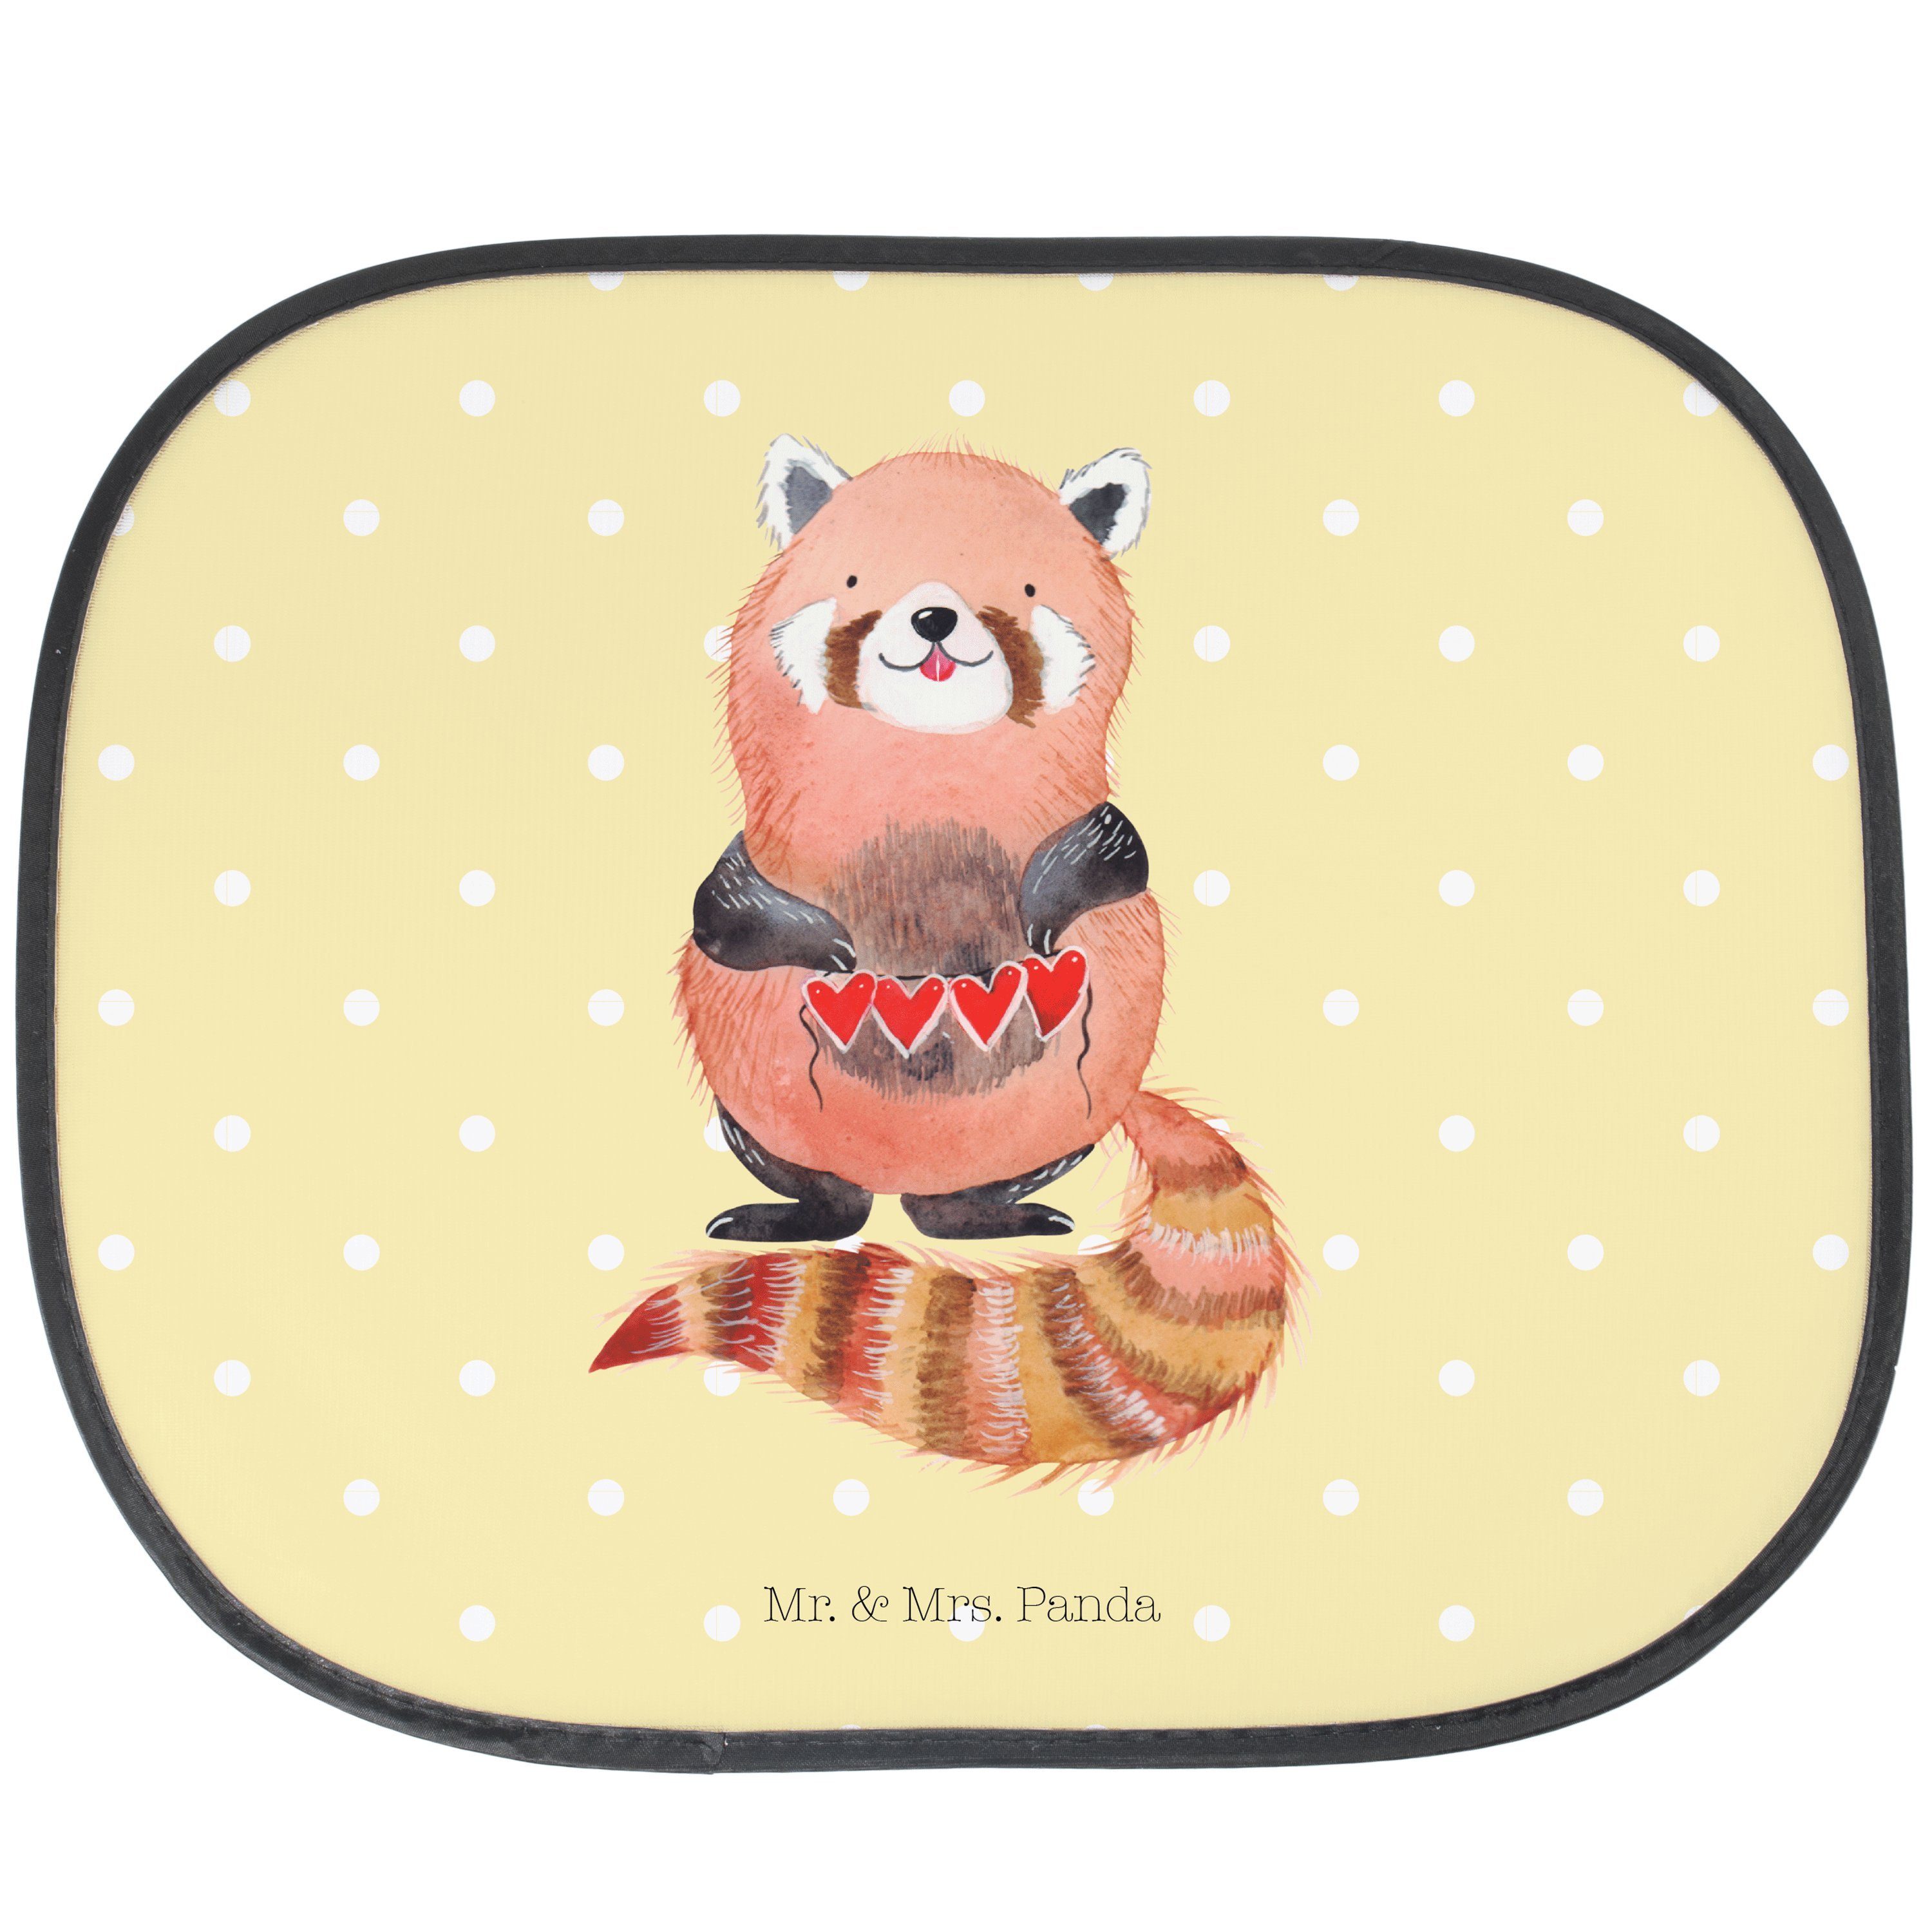 Sonnenschutz Roter Panda - Gelb Pastell - Geschenk, Herz, Tiere, Gute Laune, Sonne, Mr. & Mrs. Panda, Seidenmatt